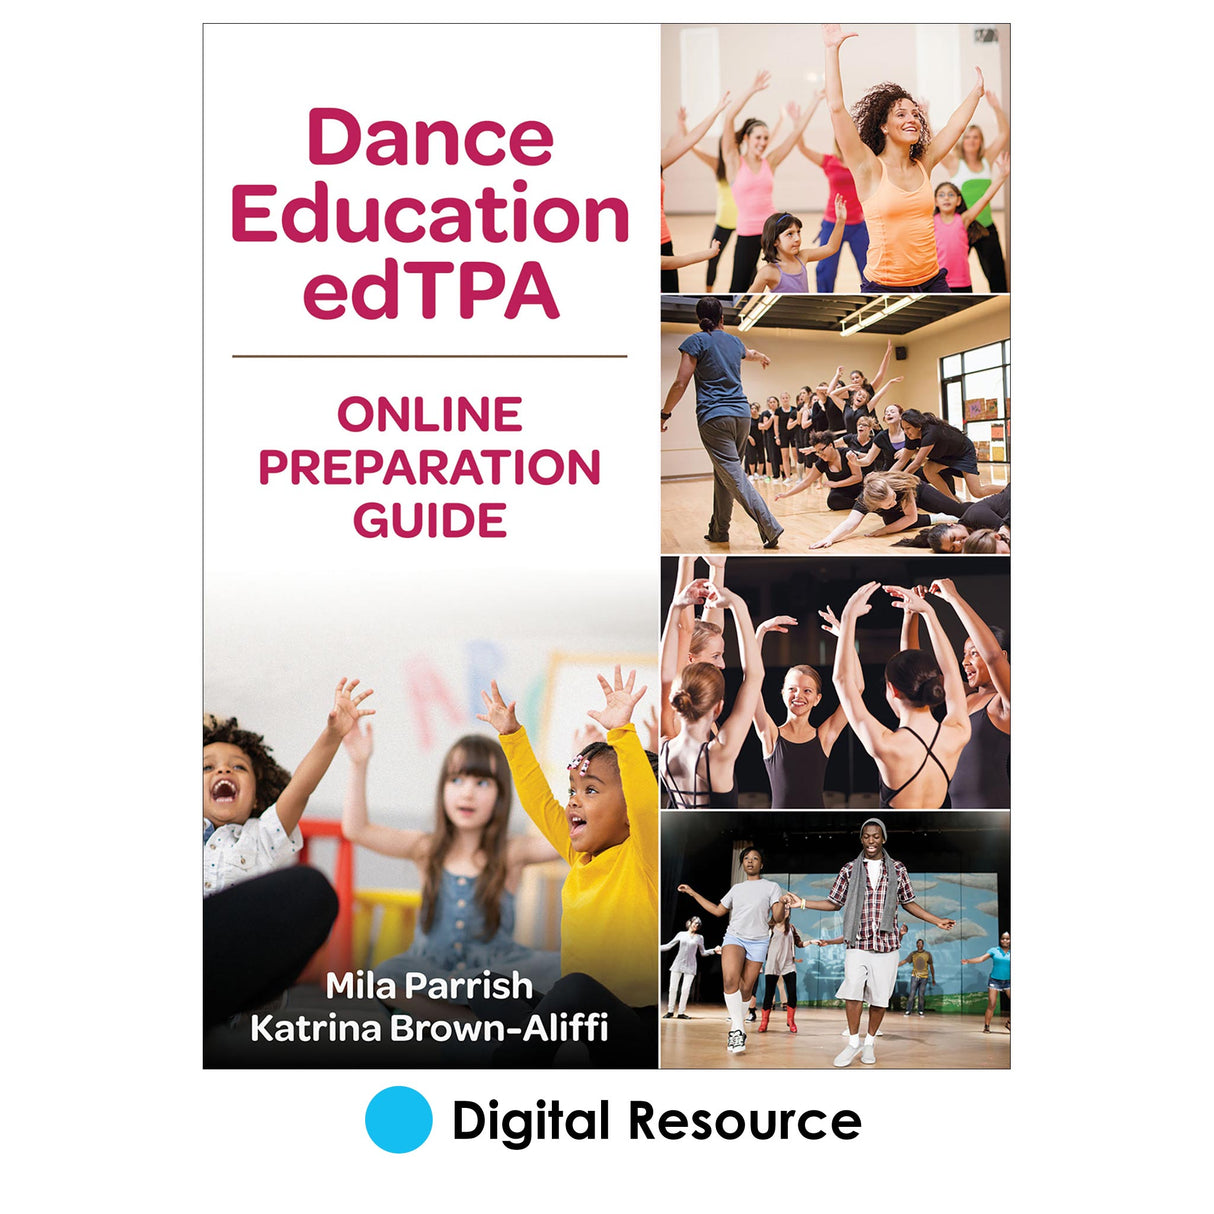 Dance Education edTPA Online Preparation Guide